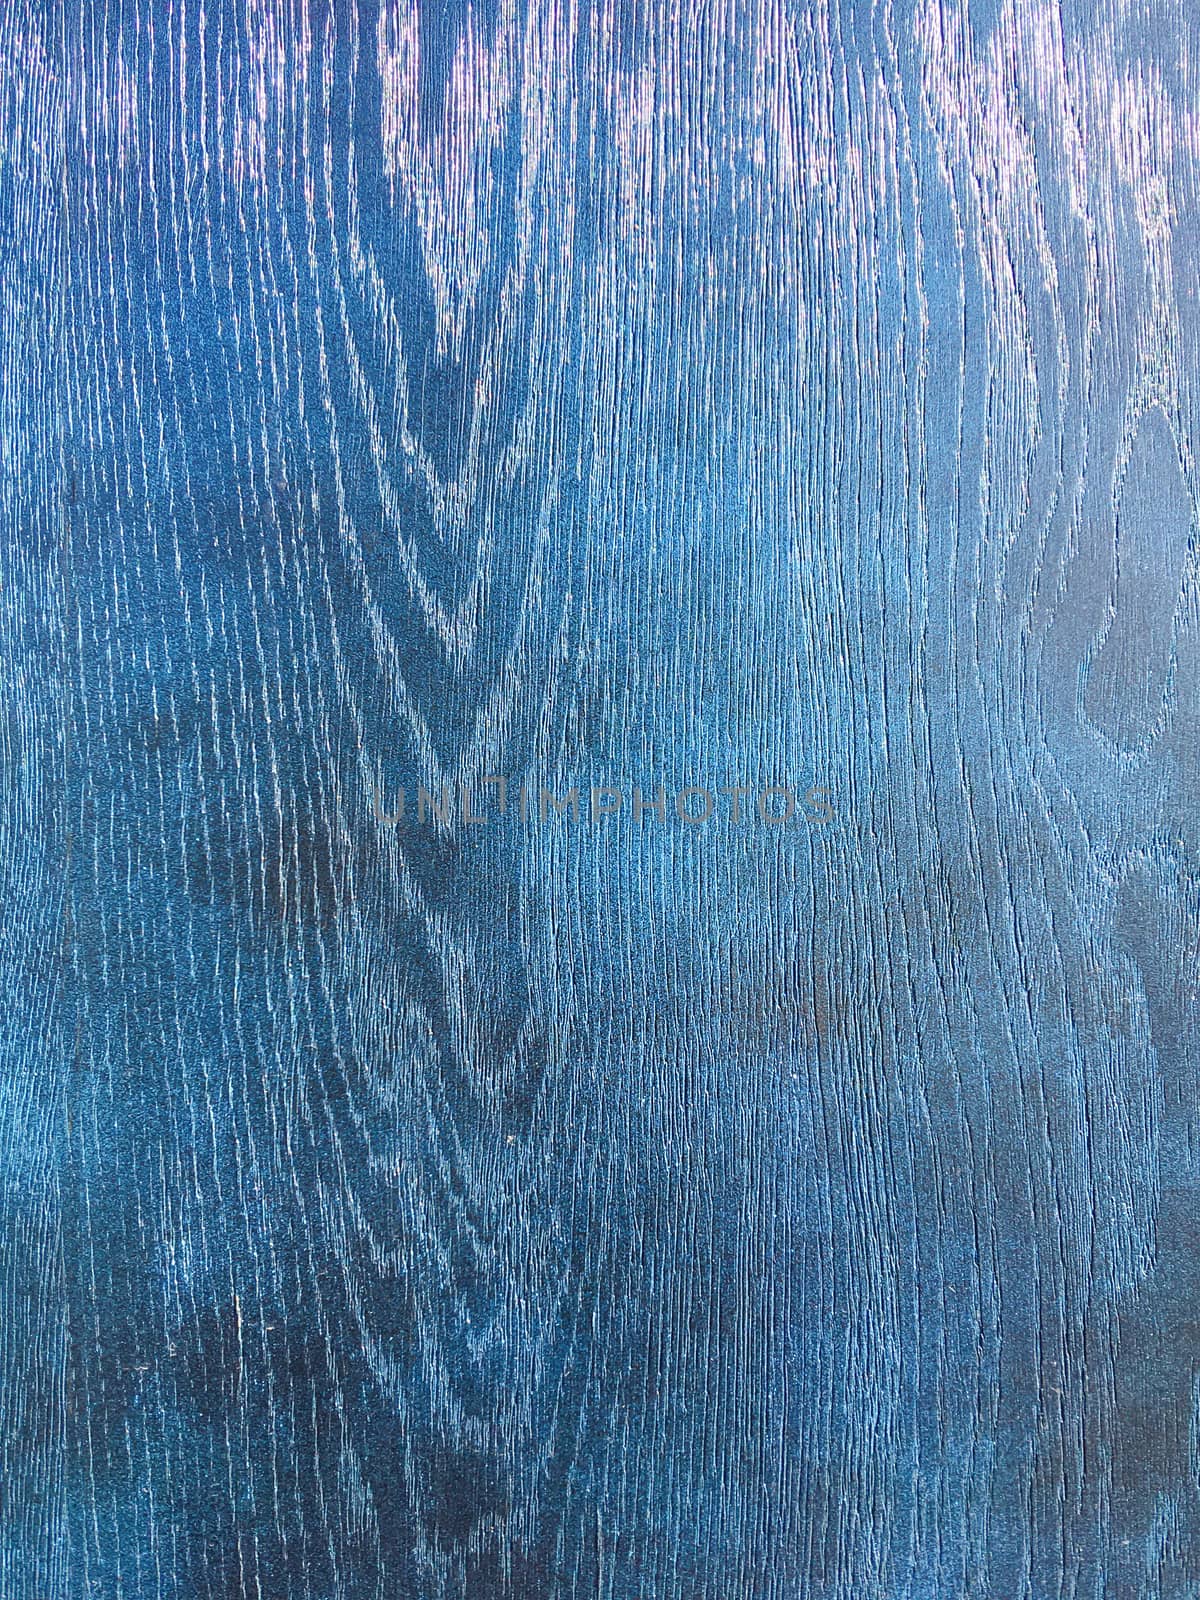 Classic blue wooden background of old door.